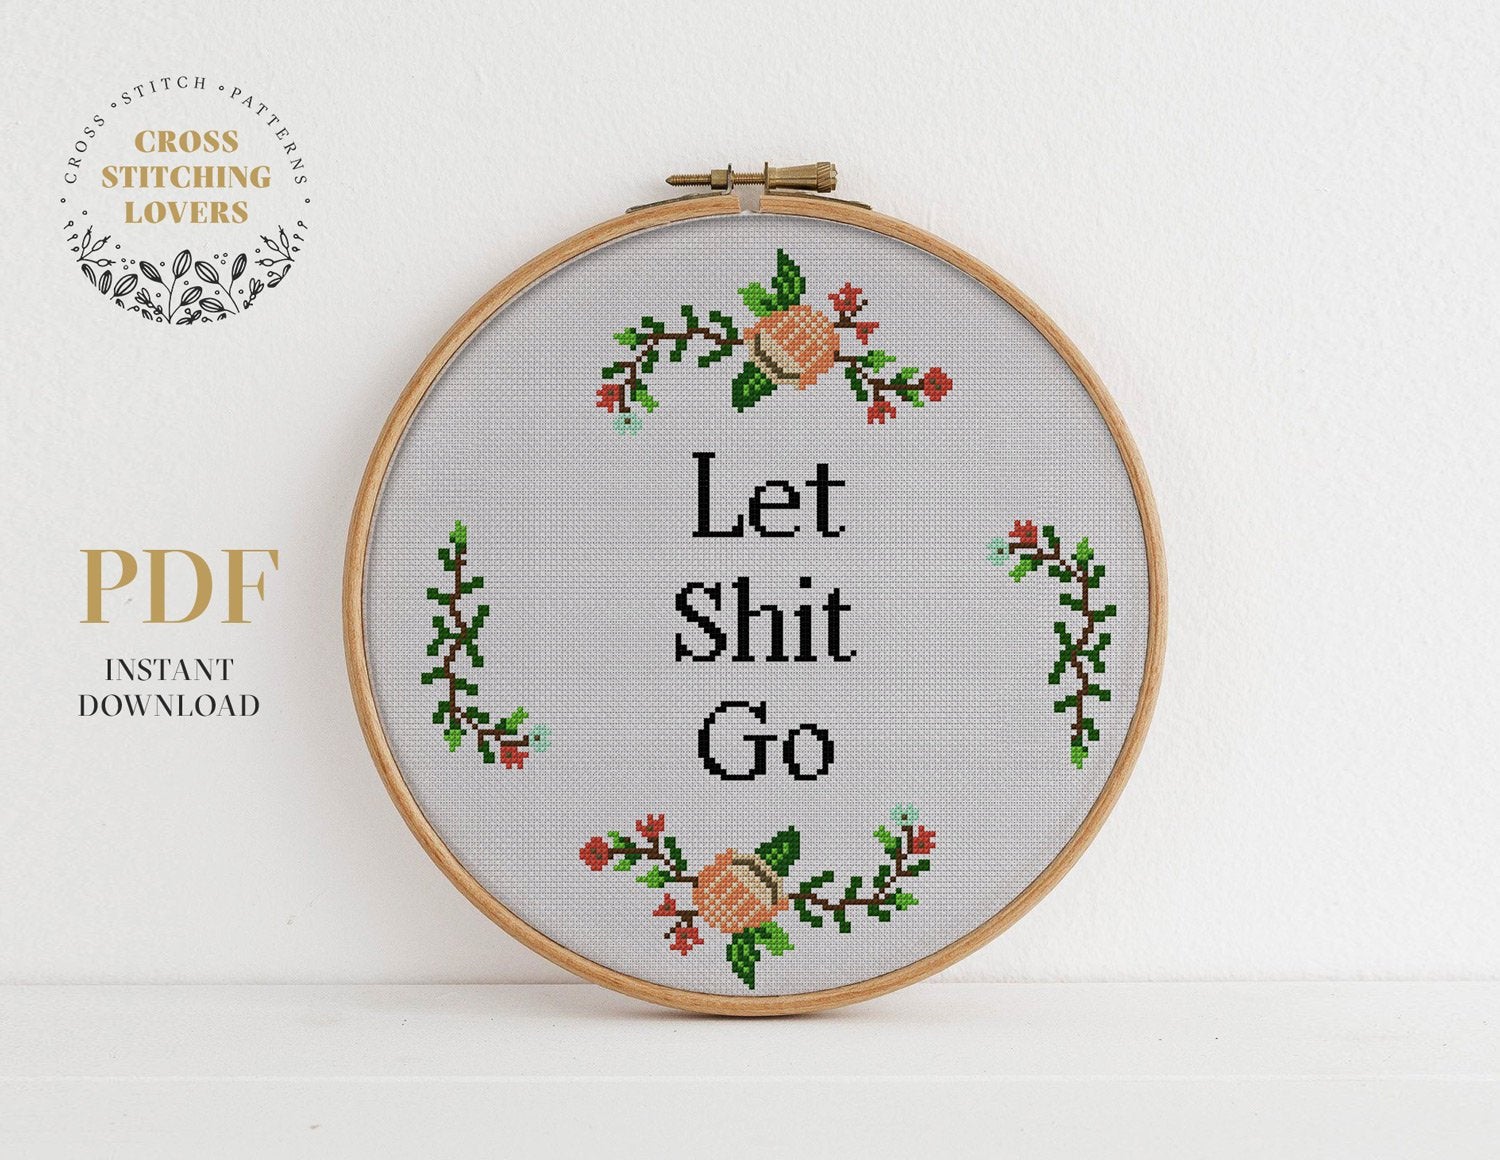 Funny "Let Shit Go" - Cross stitch pattern